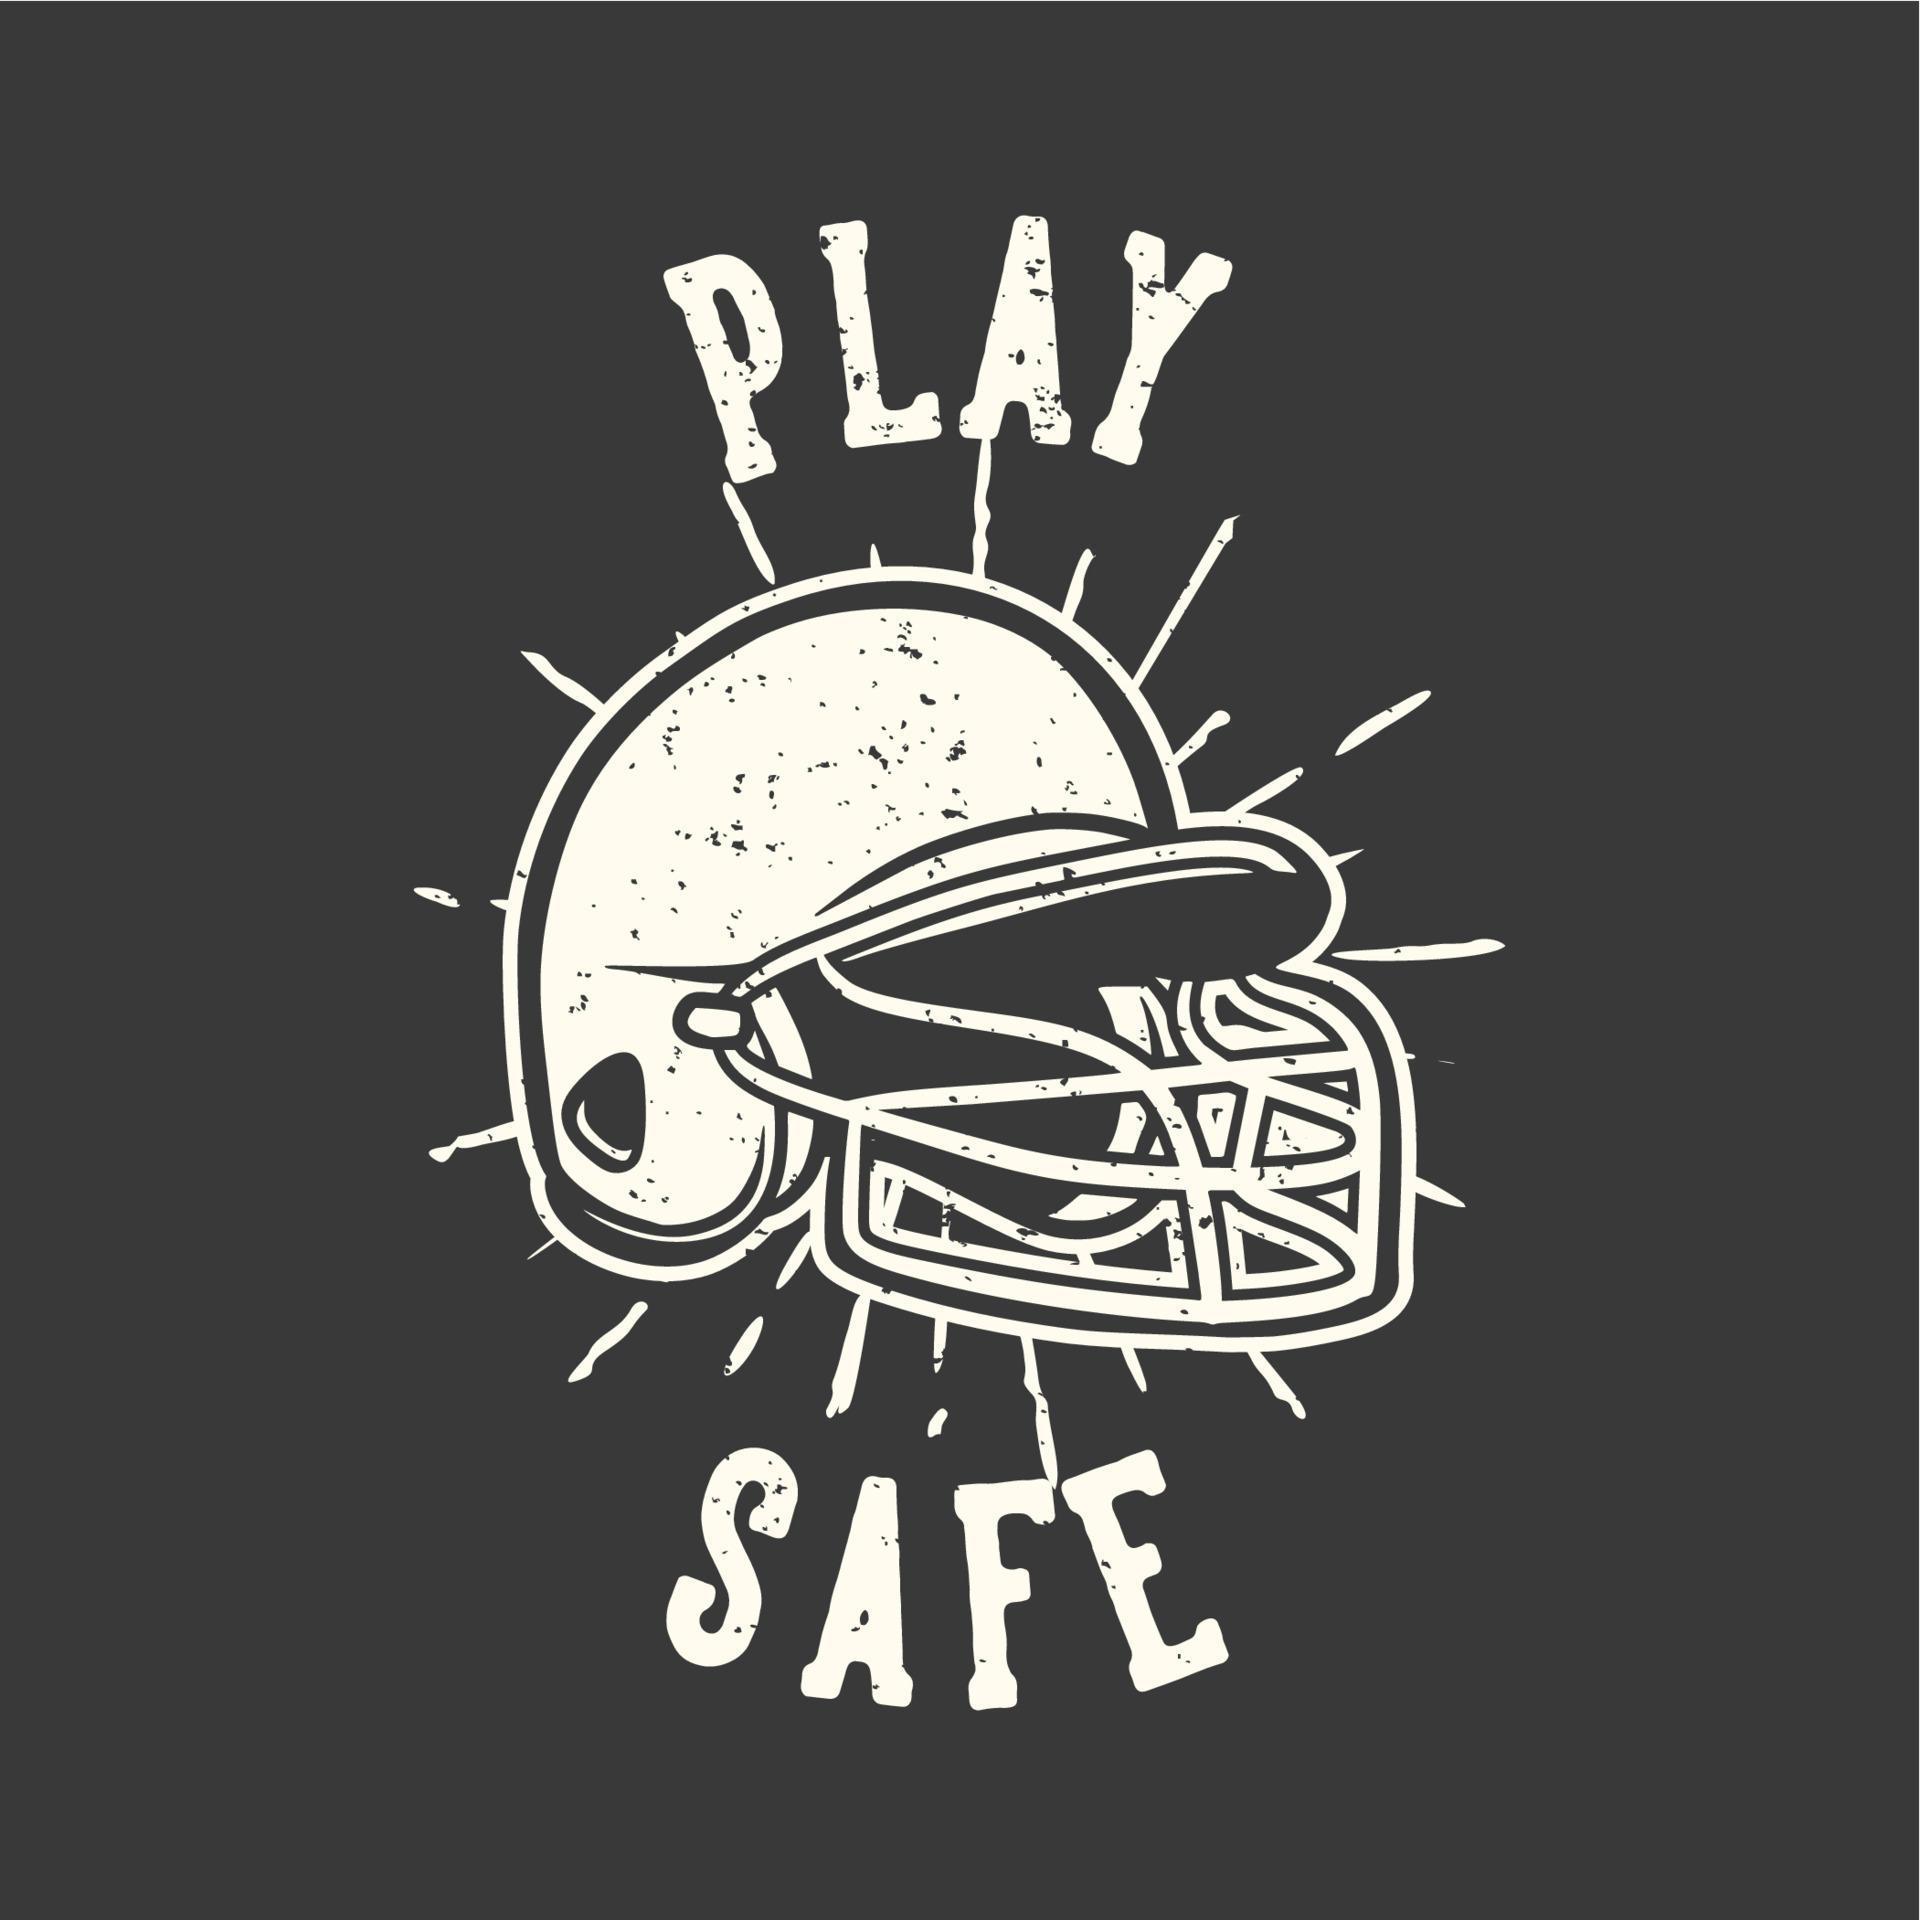 Play safe slogan